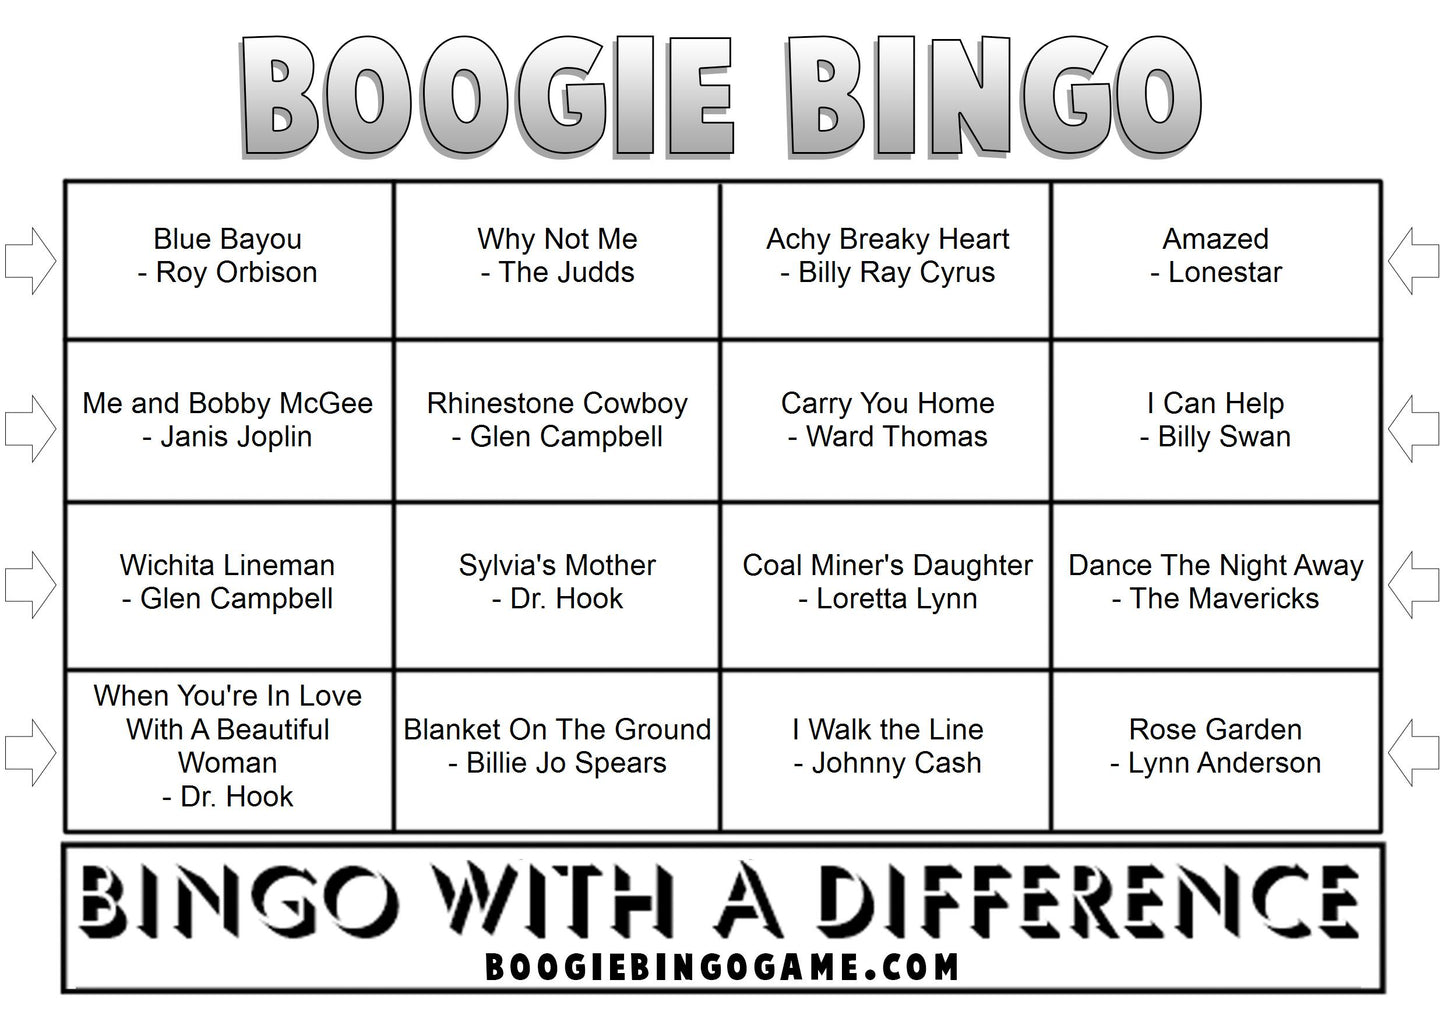 Game 48 | Country Classics | Boogie Bingo | Printable Music Bingo Tickets